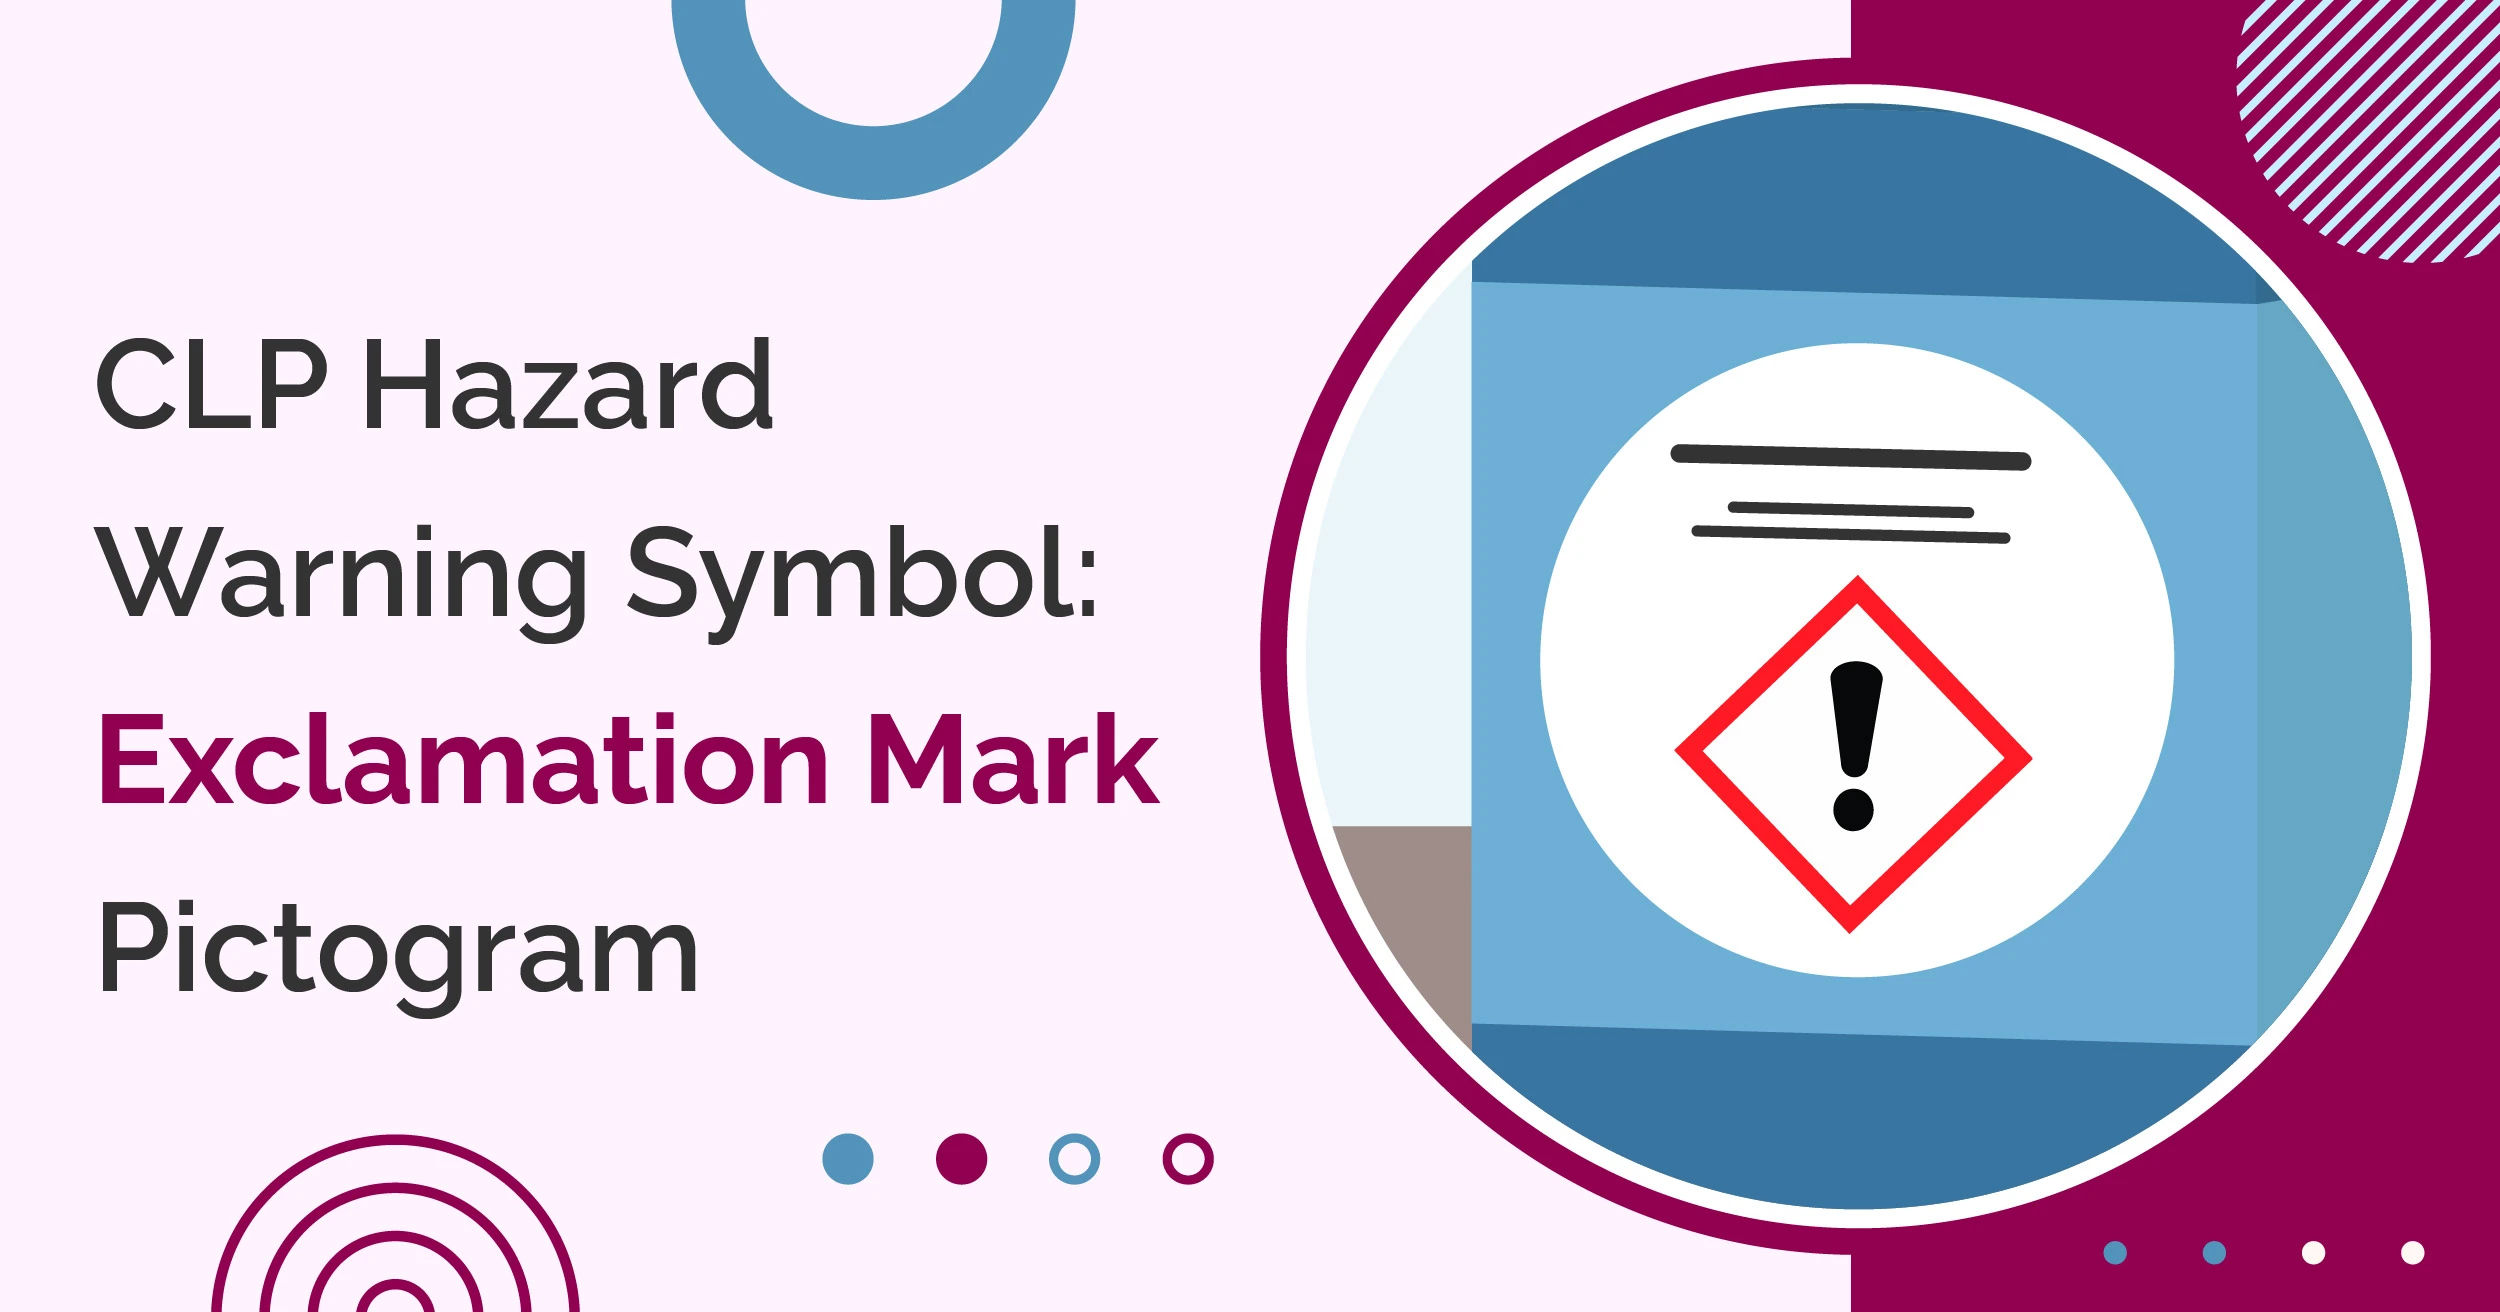 CLP Hazard Warning Symbol: Exclamation Mark Pictogram